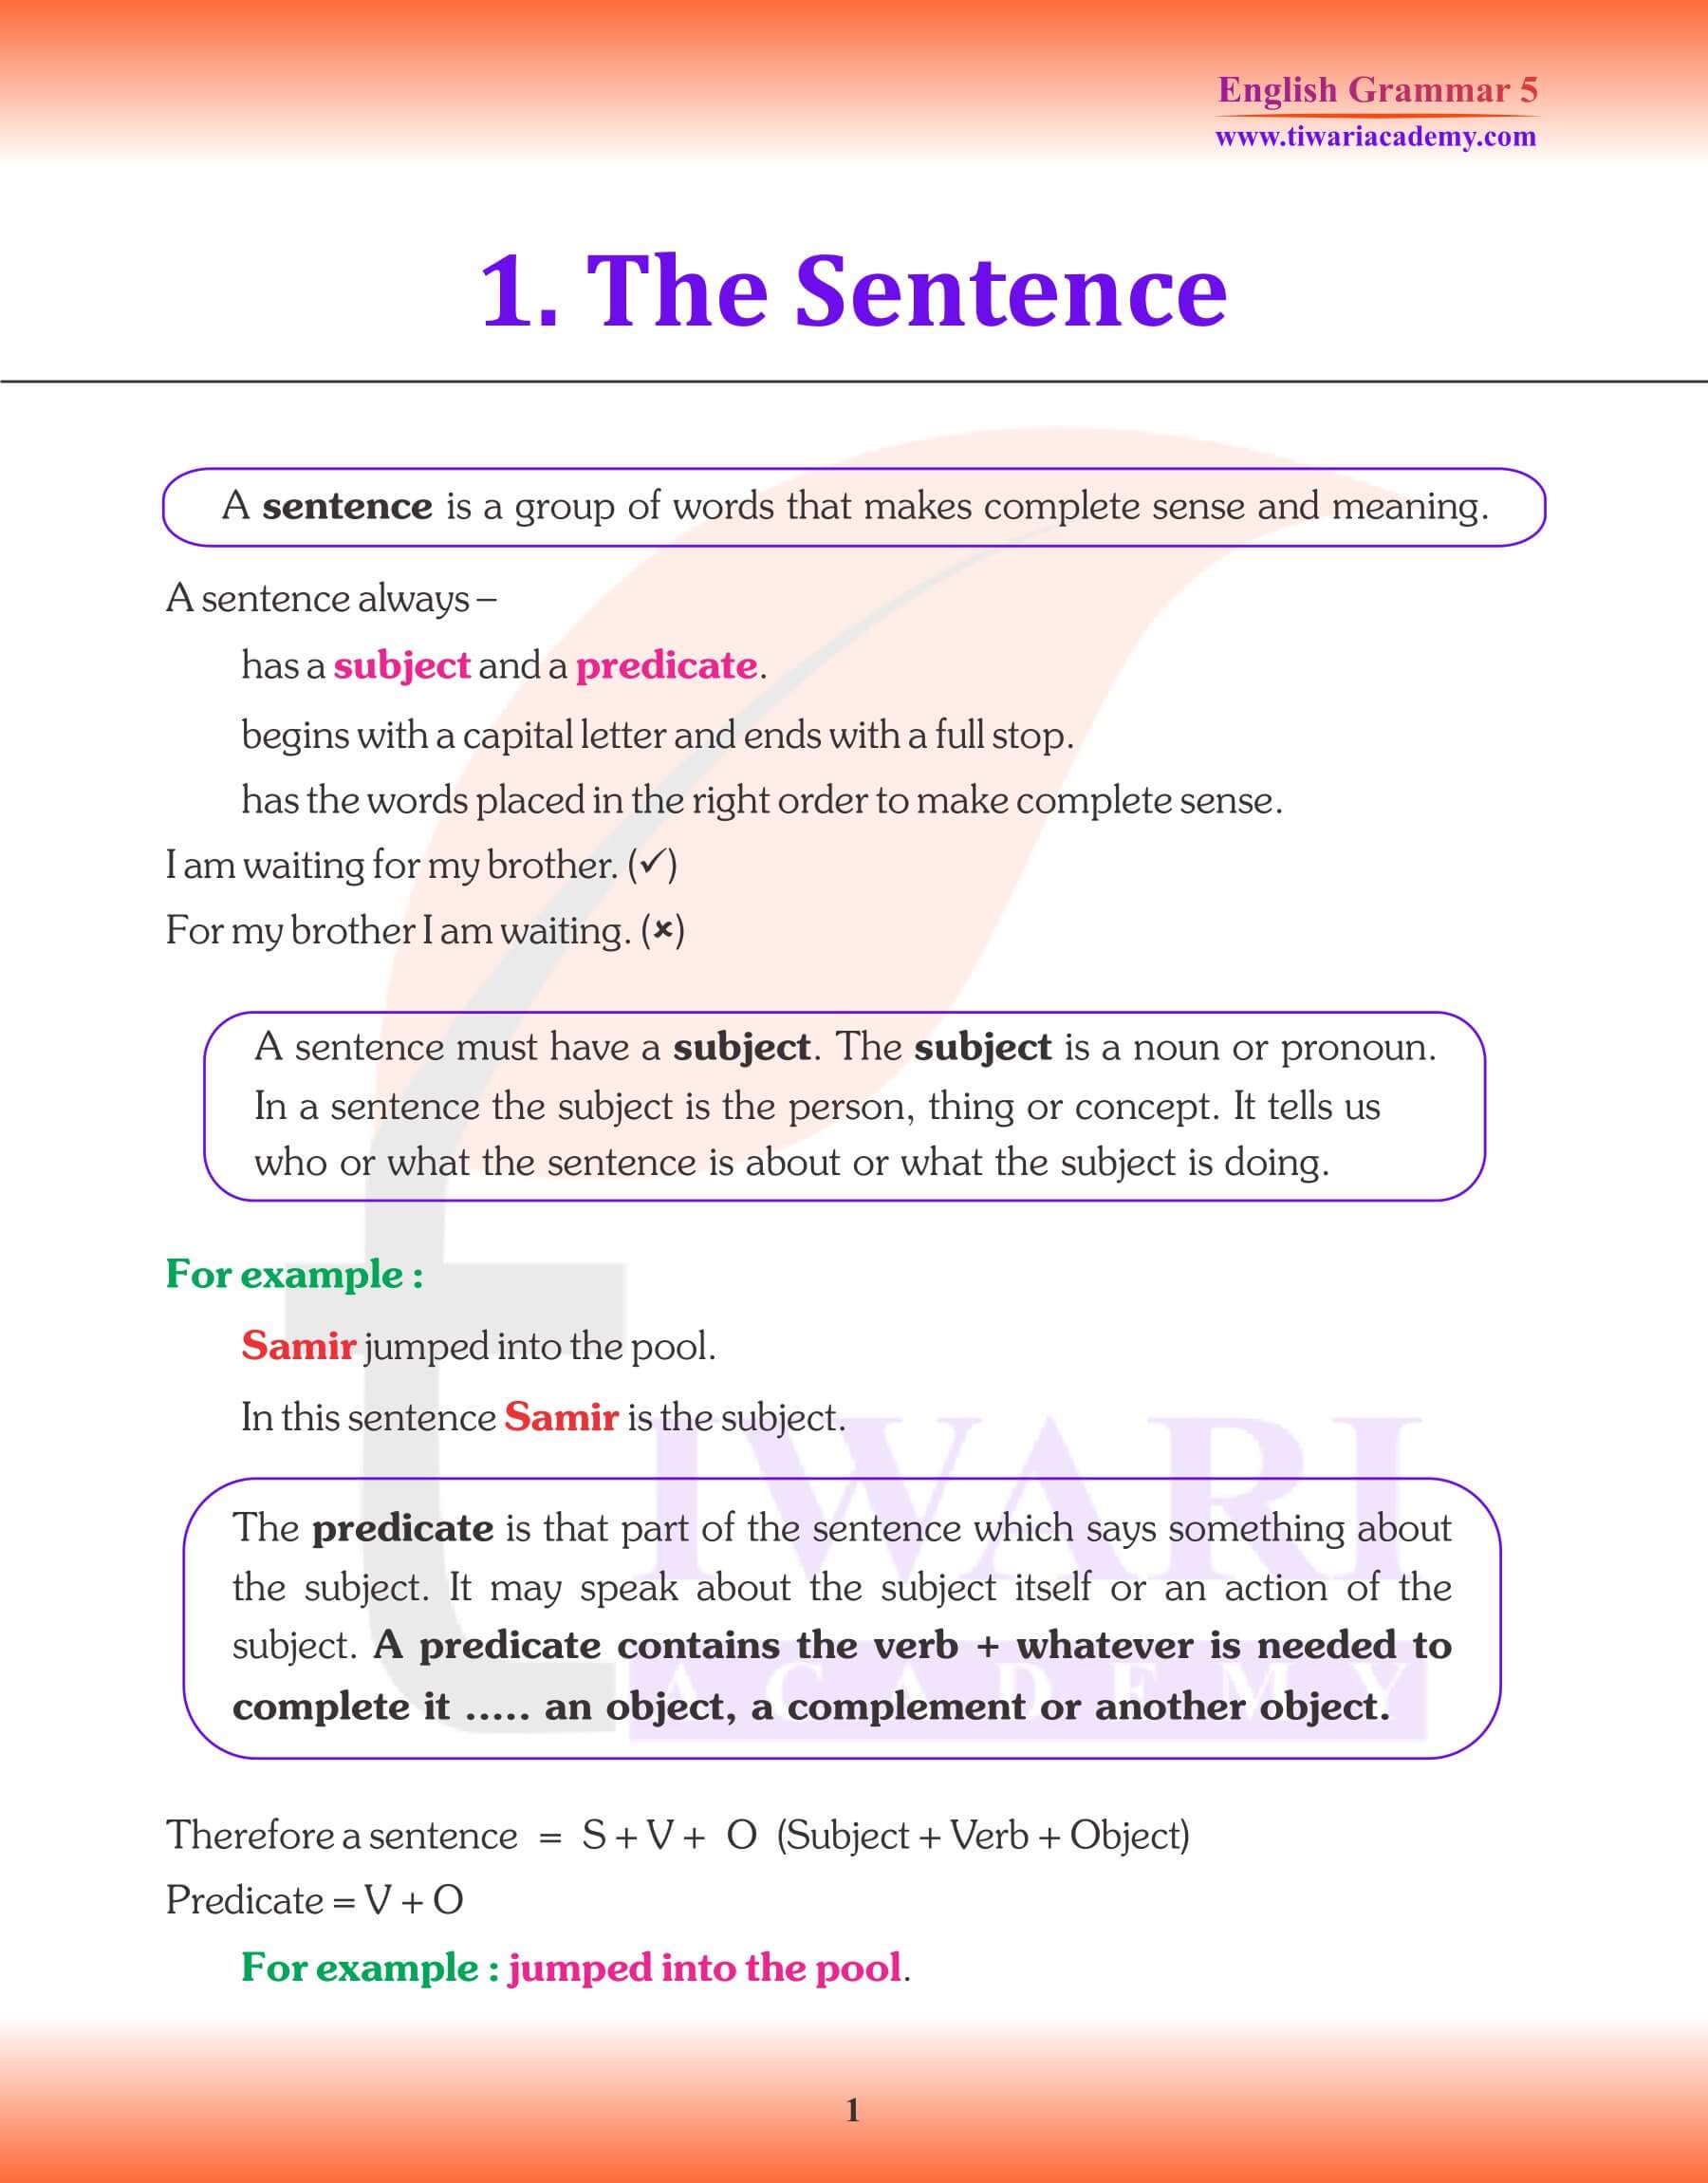 Class 5 English Grammar The Sentence Revision Book